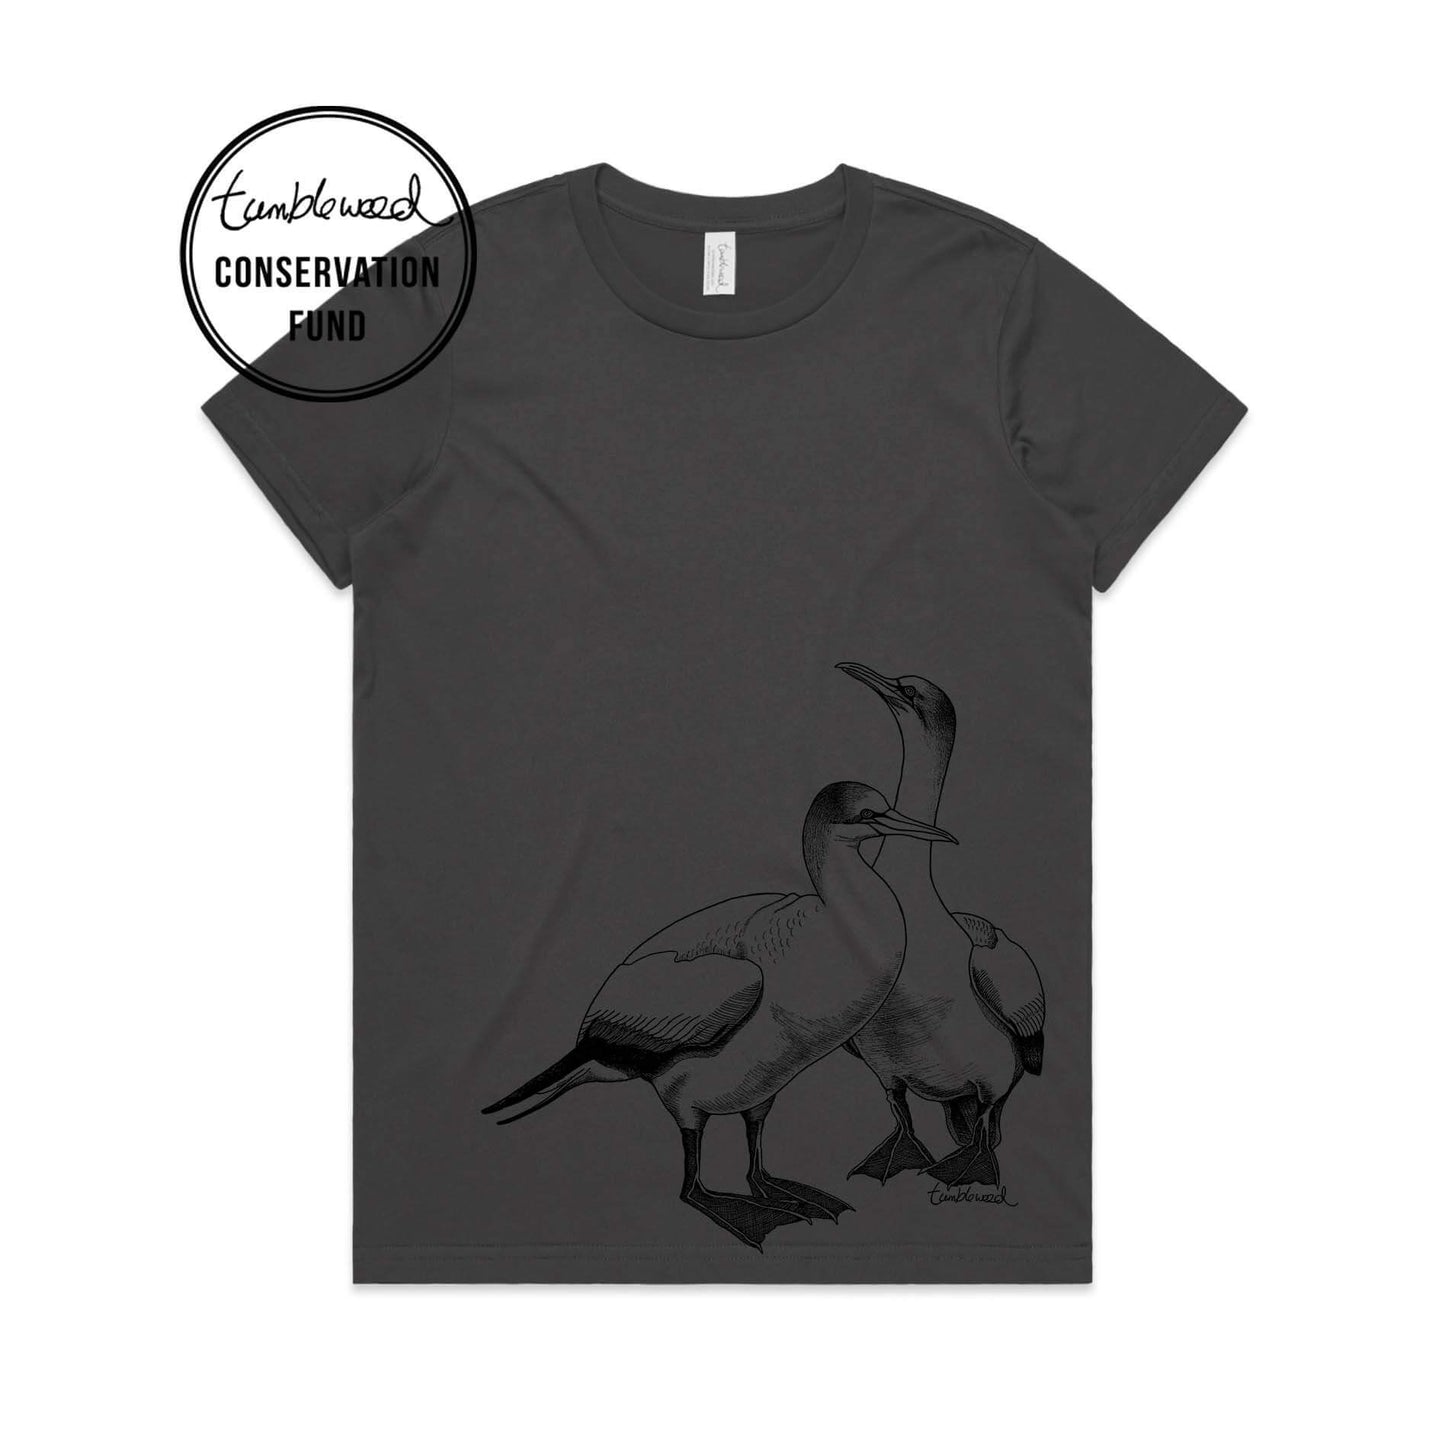 Charcoal, female t-shirt featuring a screen printed gannet design.